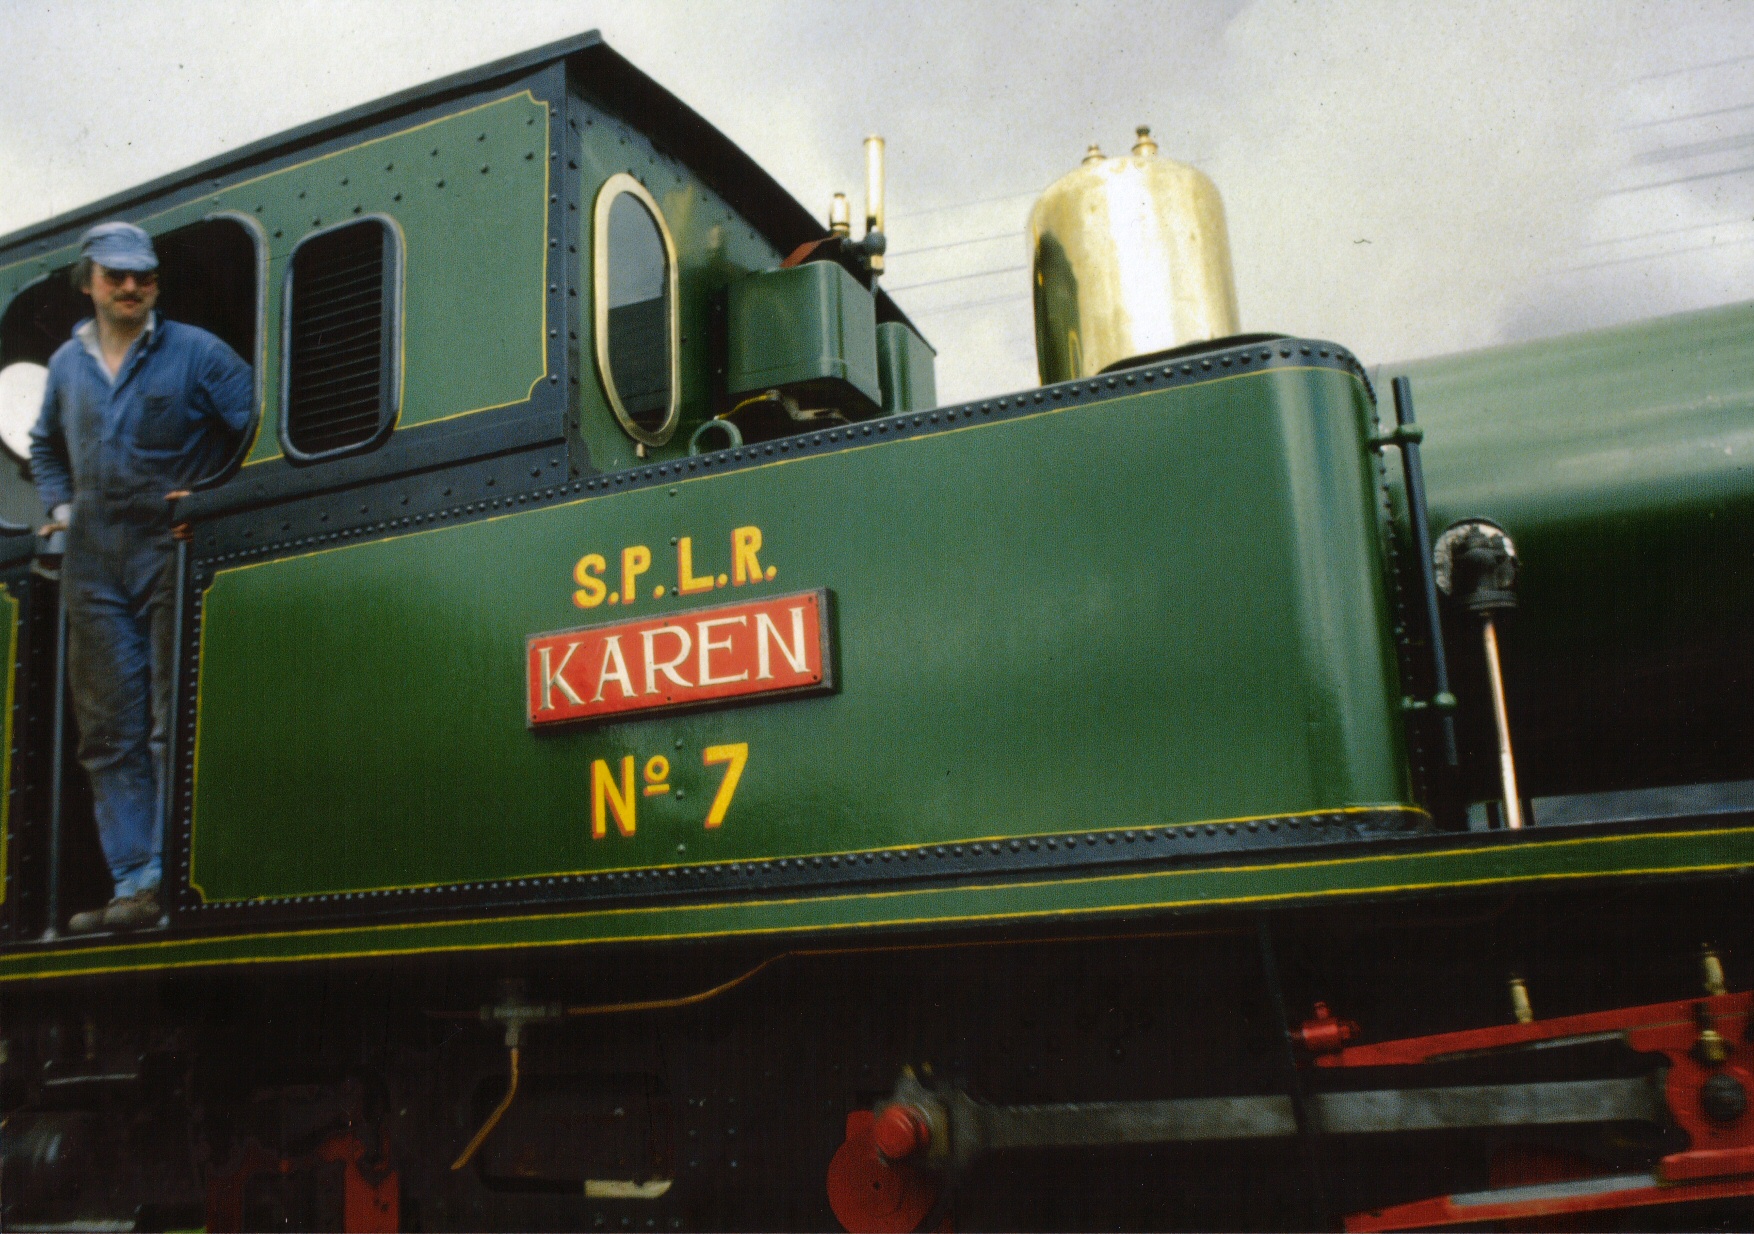 Close-up of Karen in SPLR livery